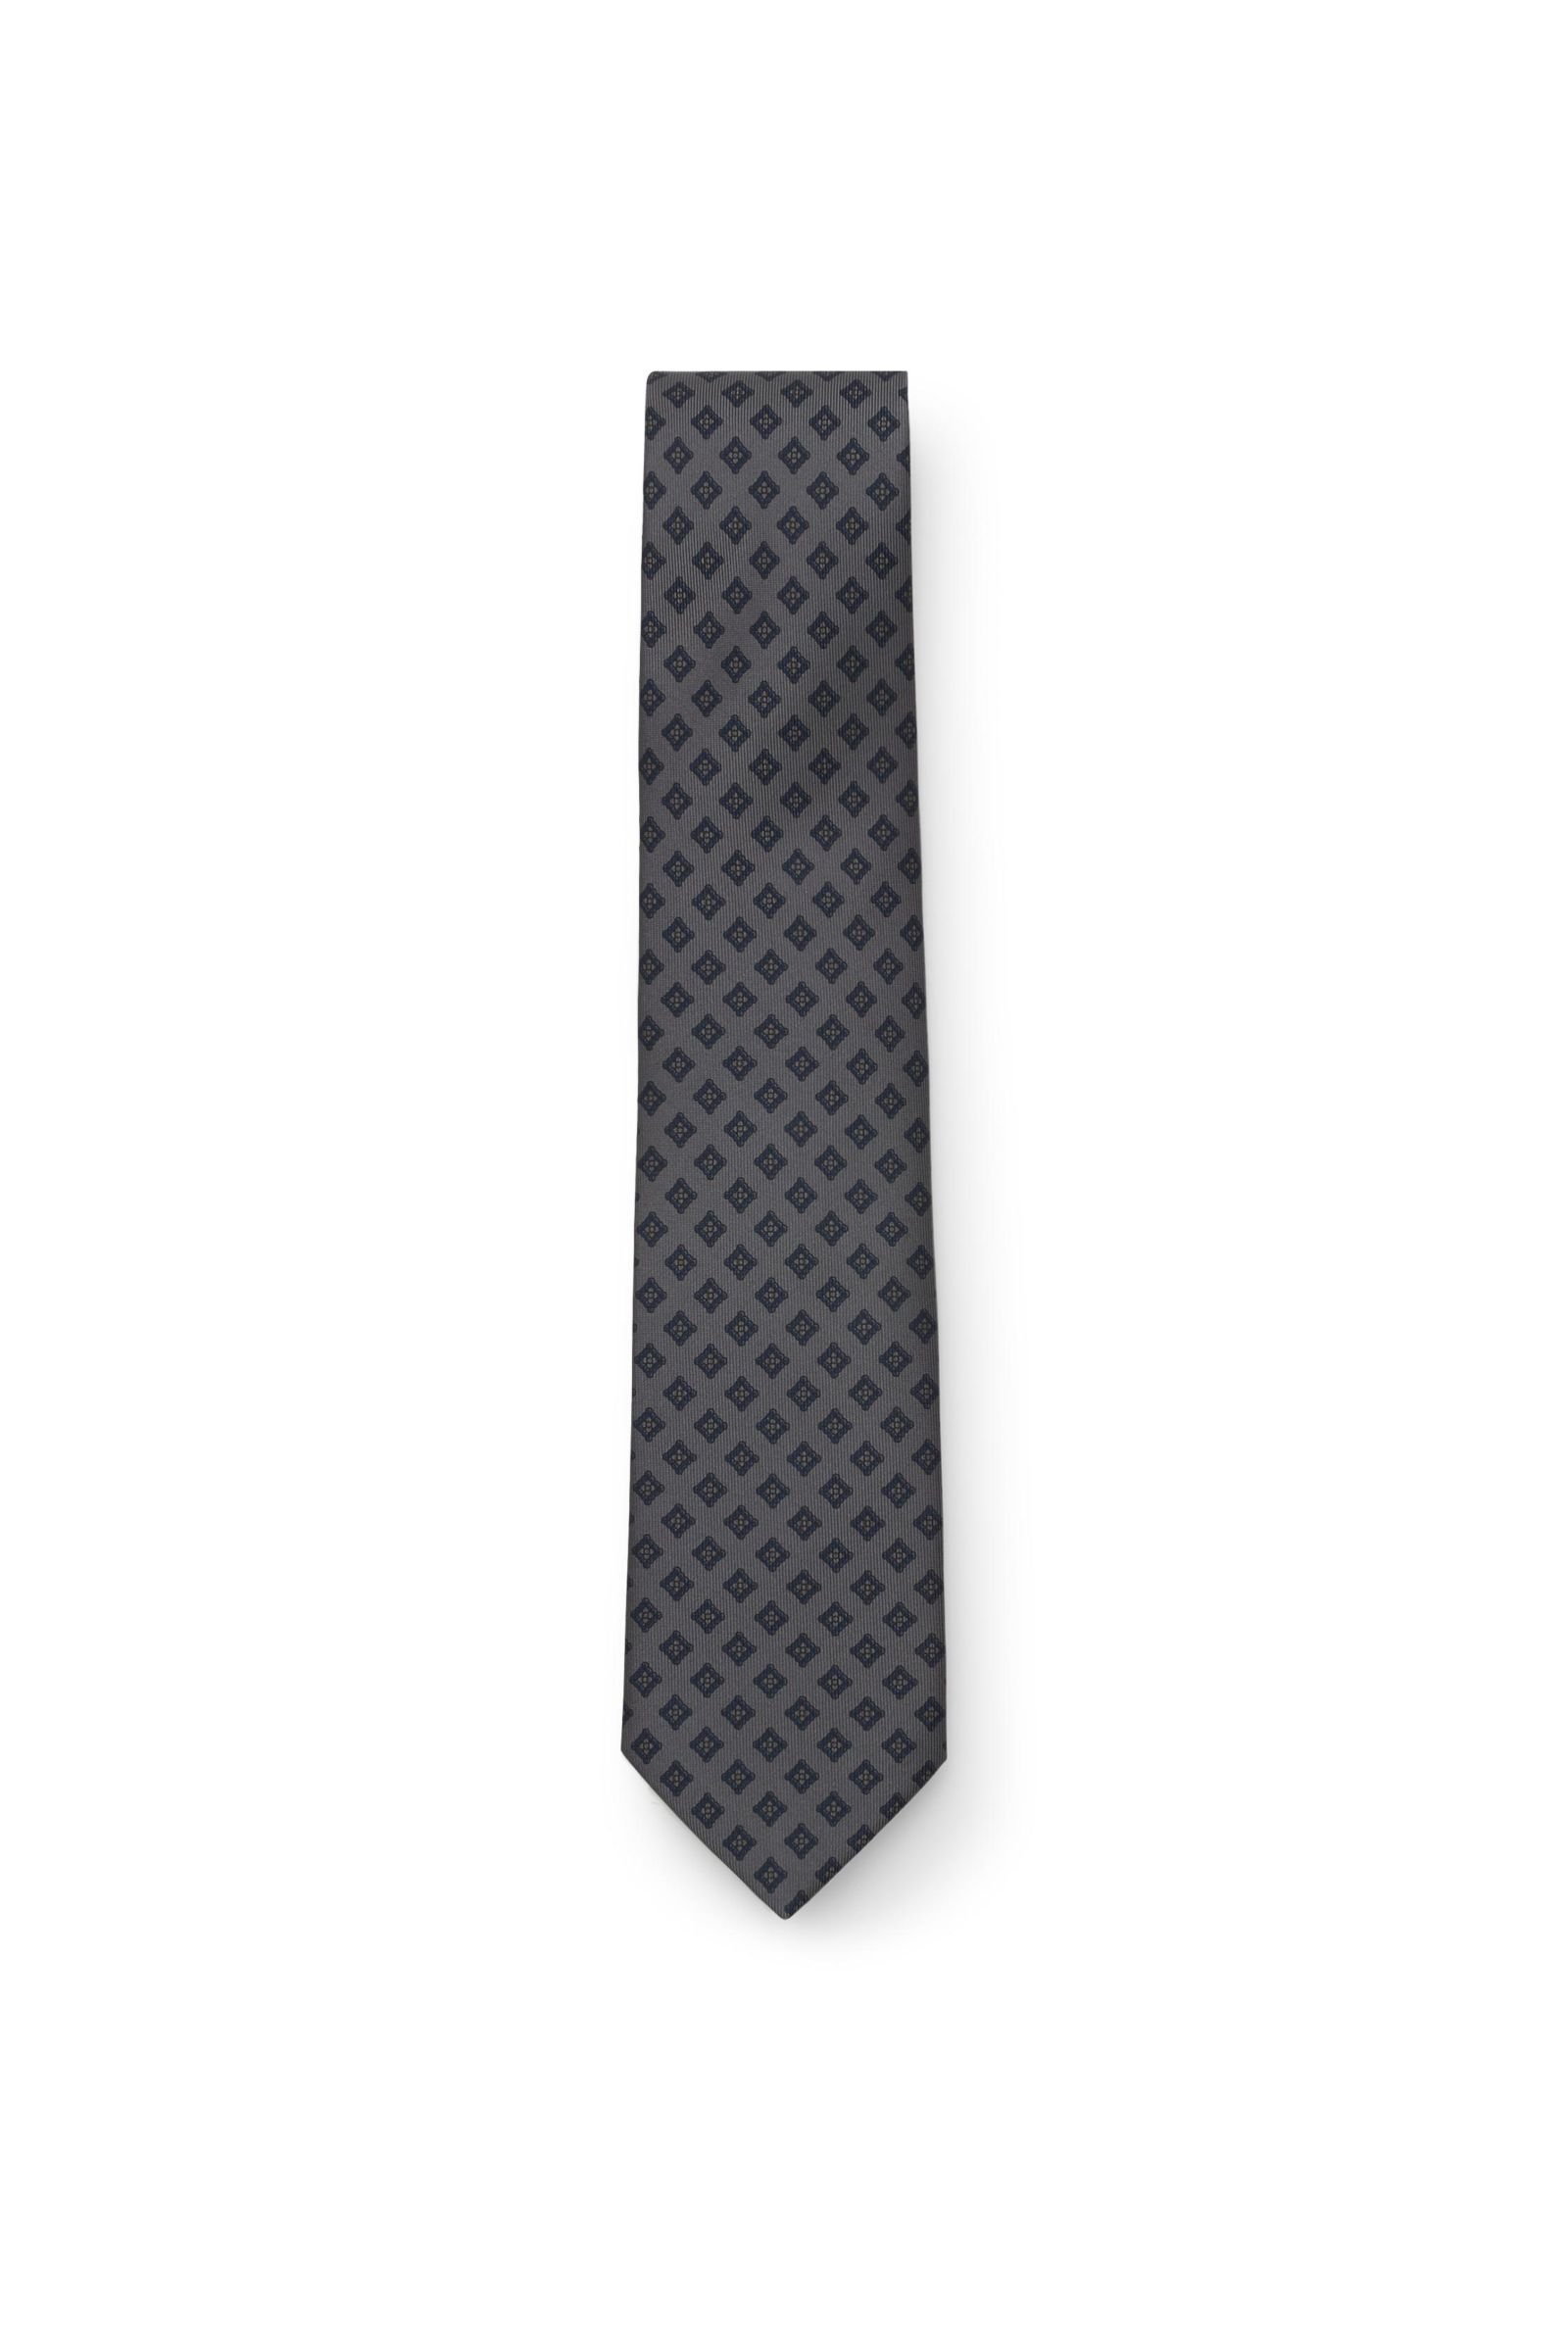 Silk tie dark grey patterned